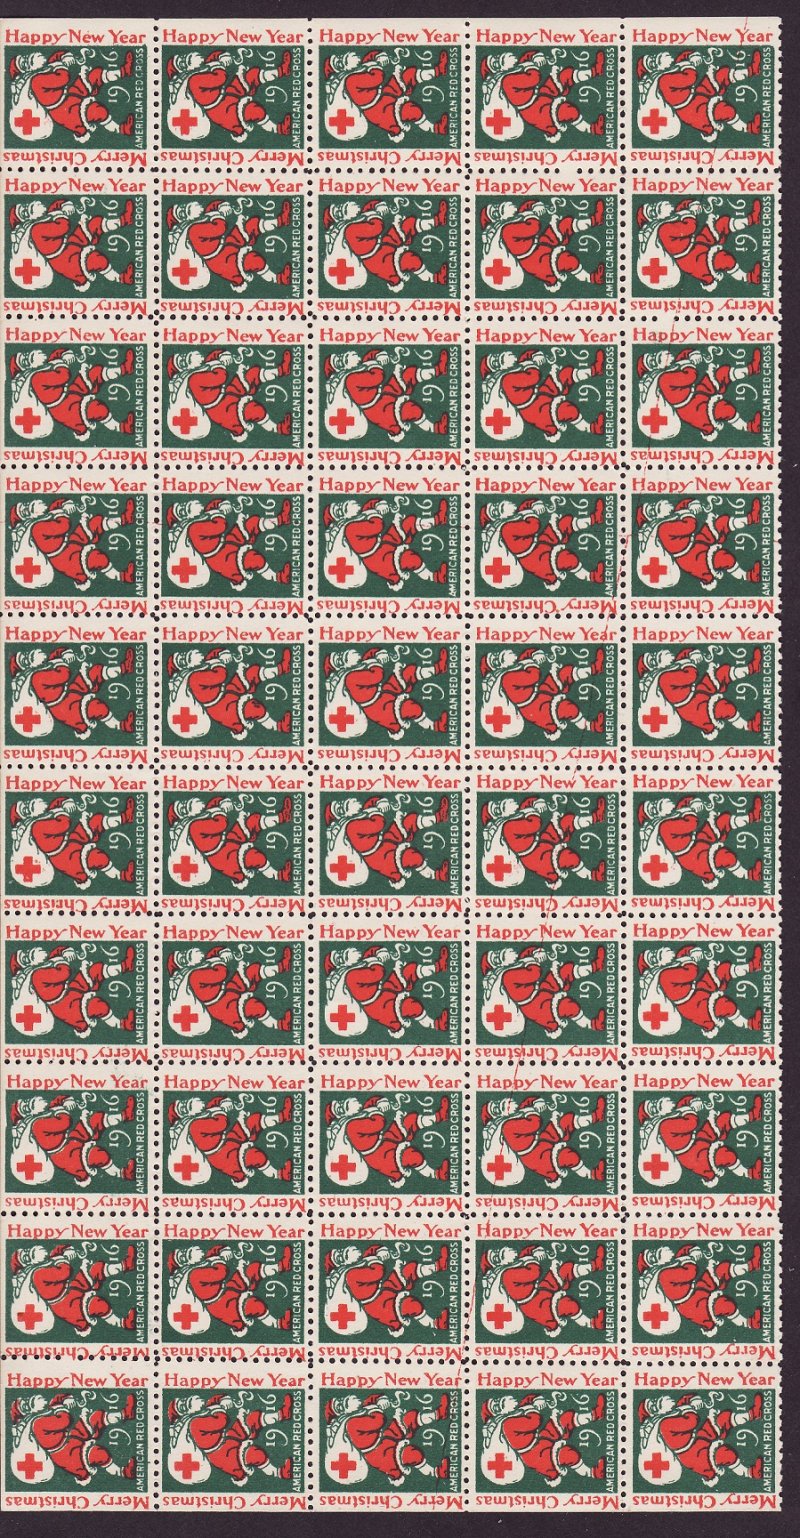 16-1.6x, WX18, 1916 U.S. Red Cross Christmas Seals 1/2 Sheet, perf. 12 1/2